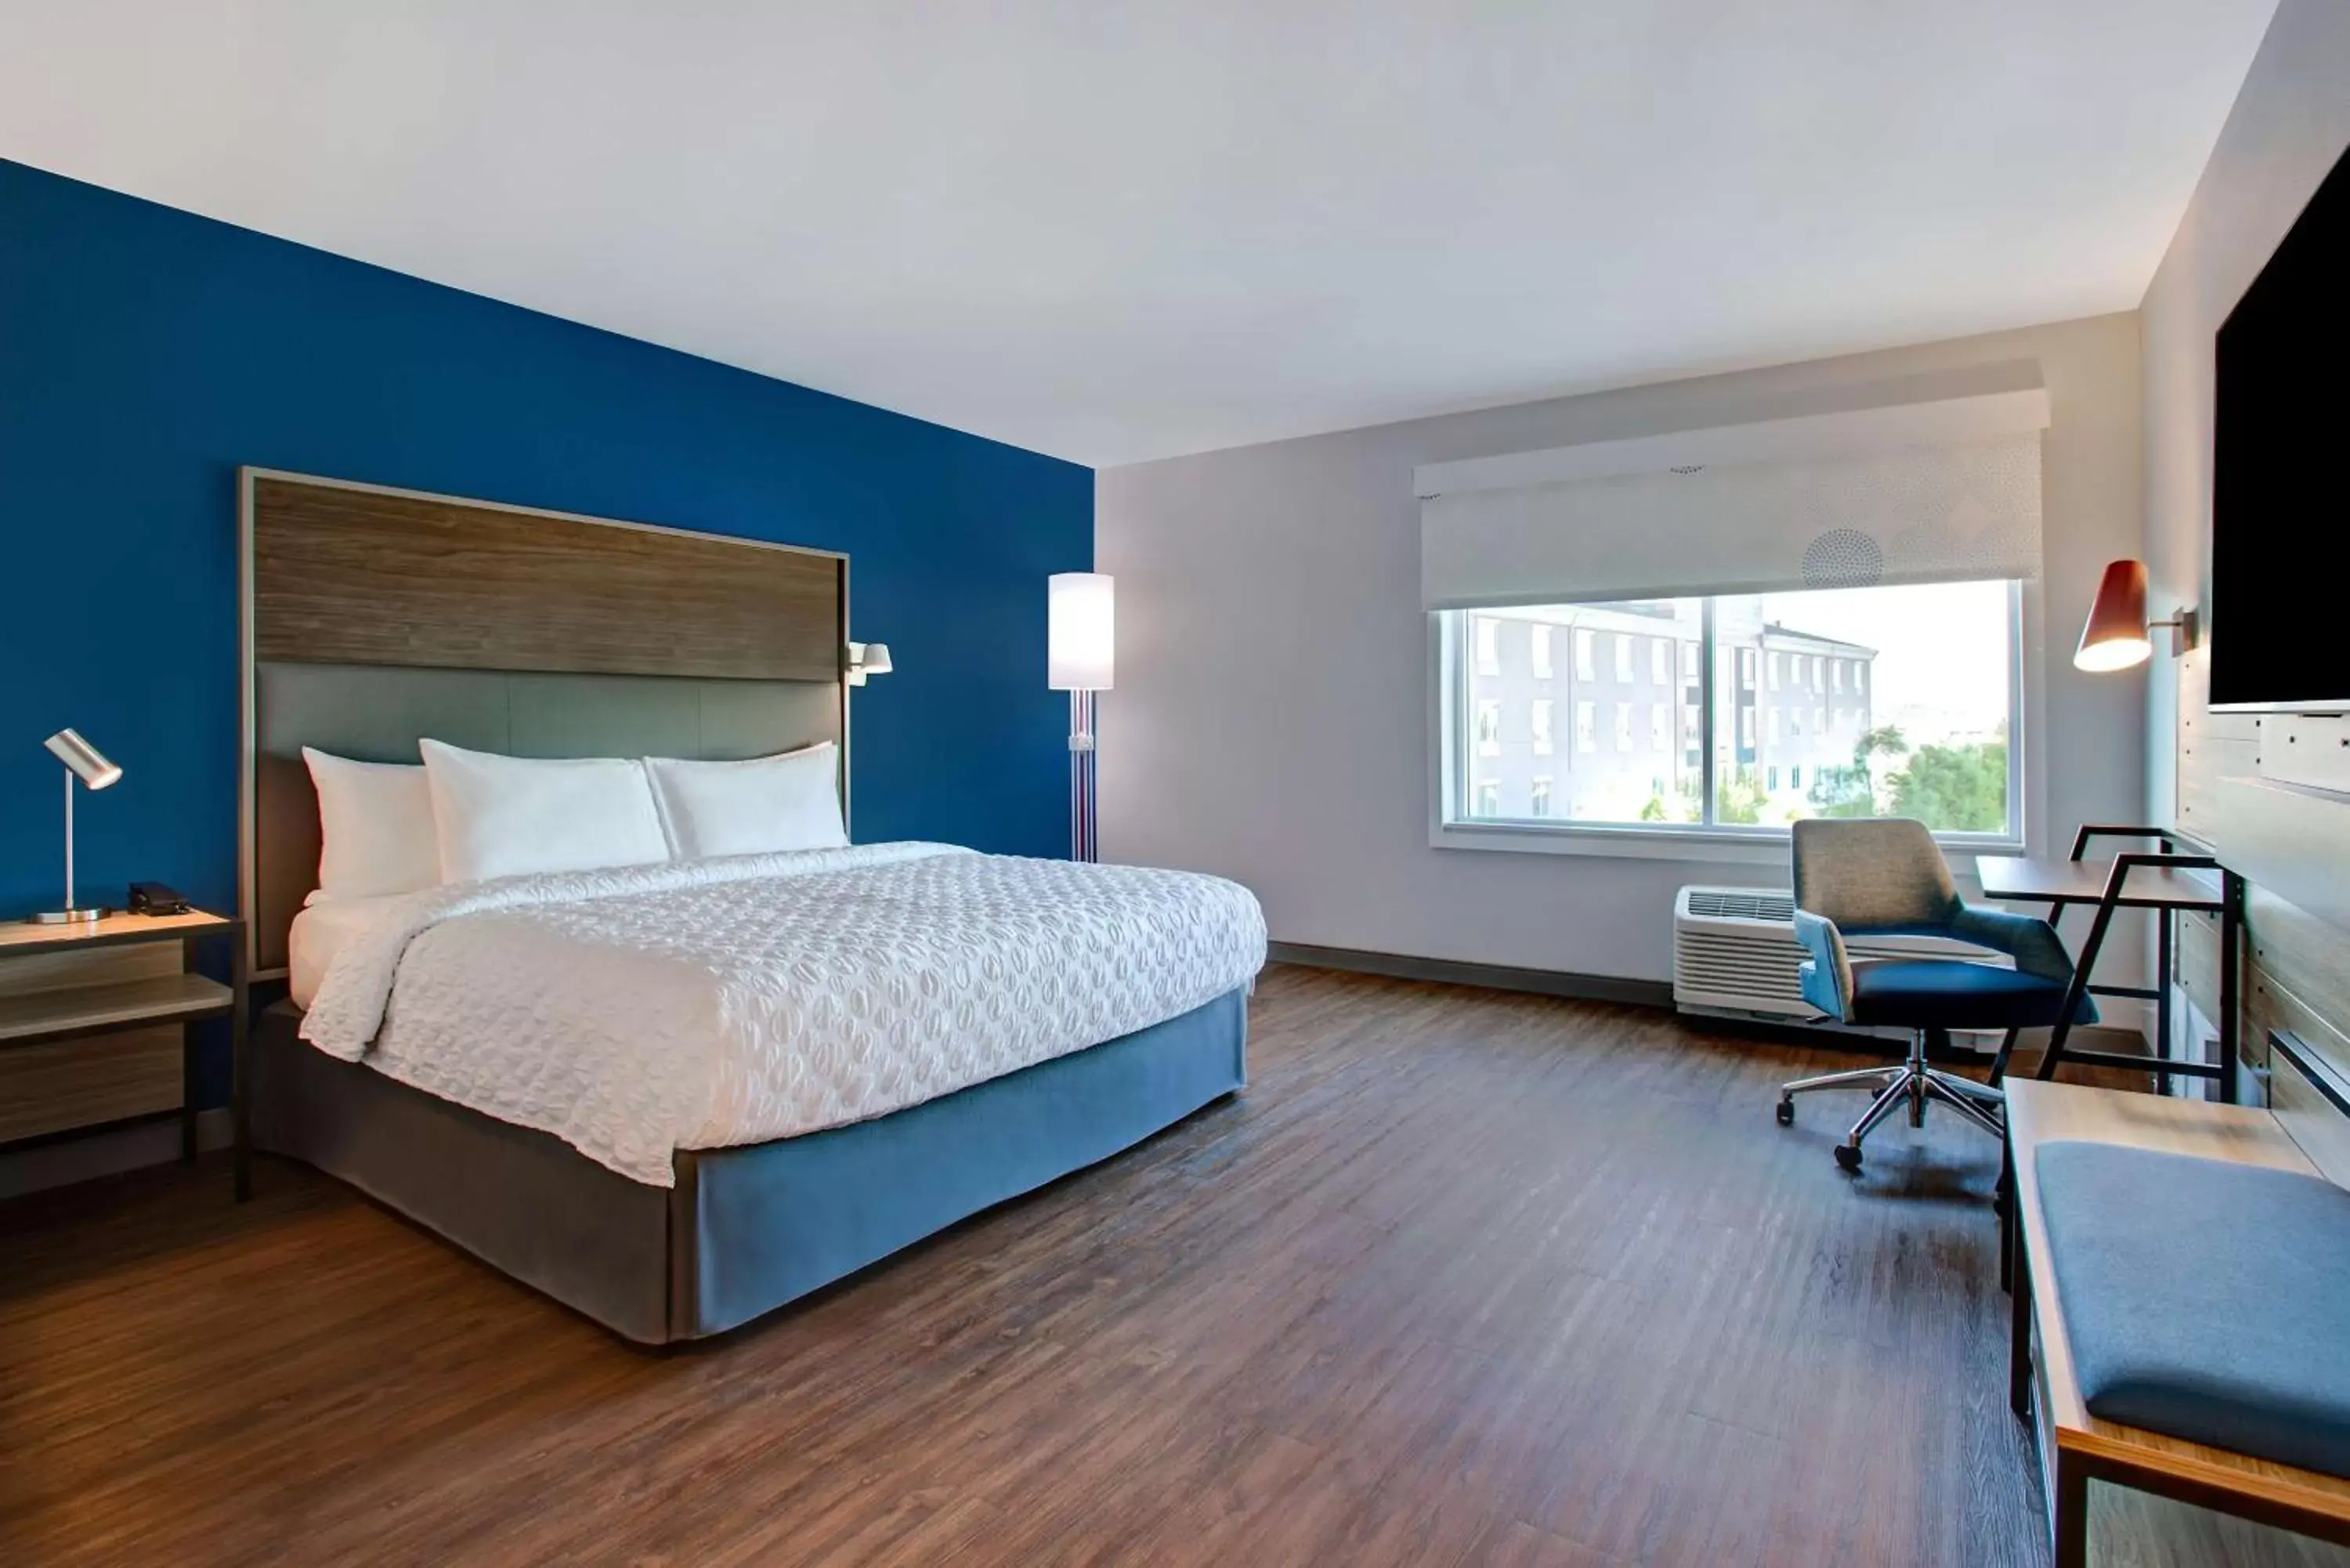 Bedroom in Tru By Hilton Northlake Fort Worth, Tx